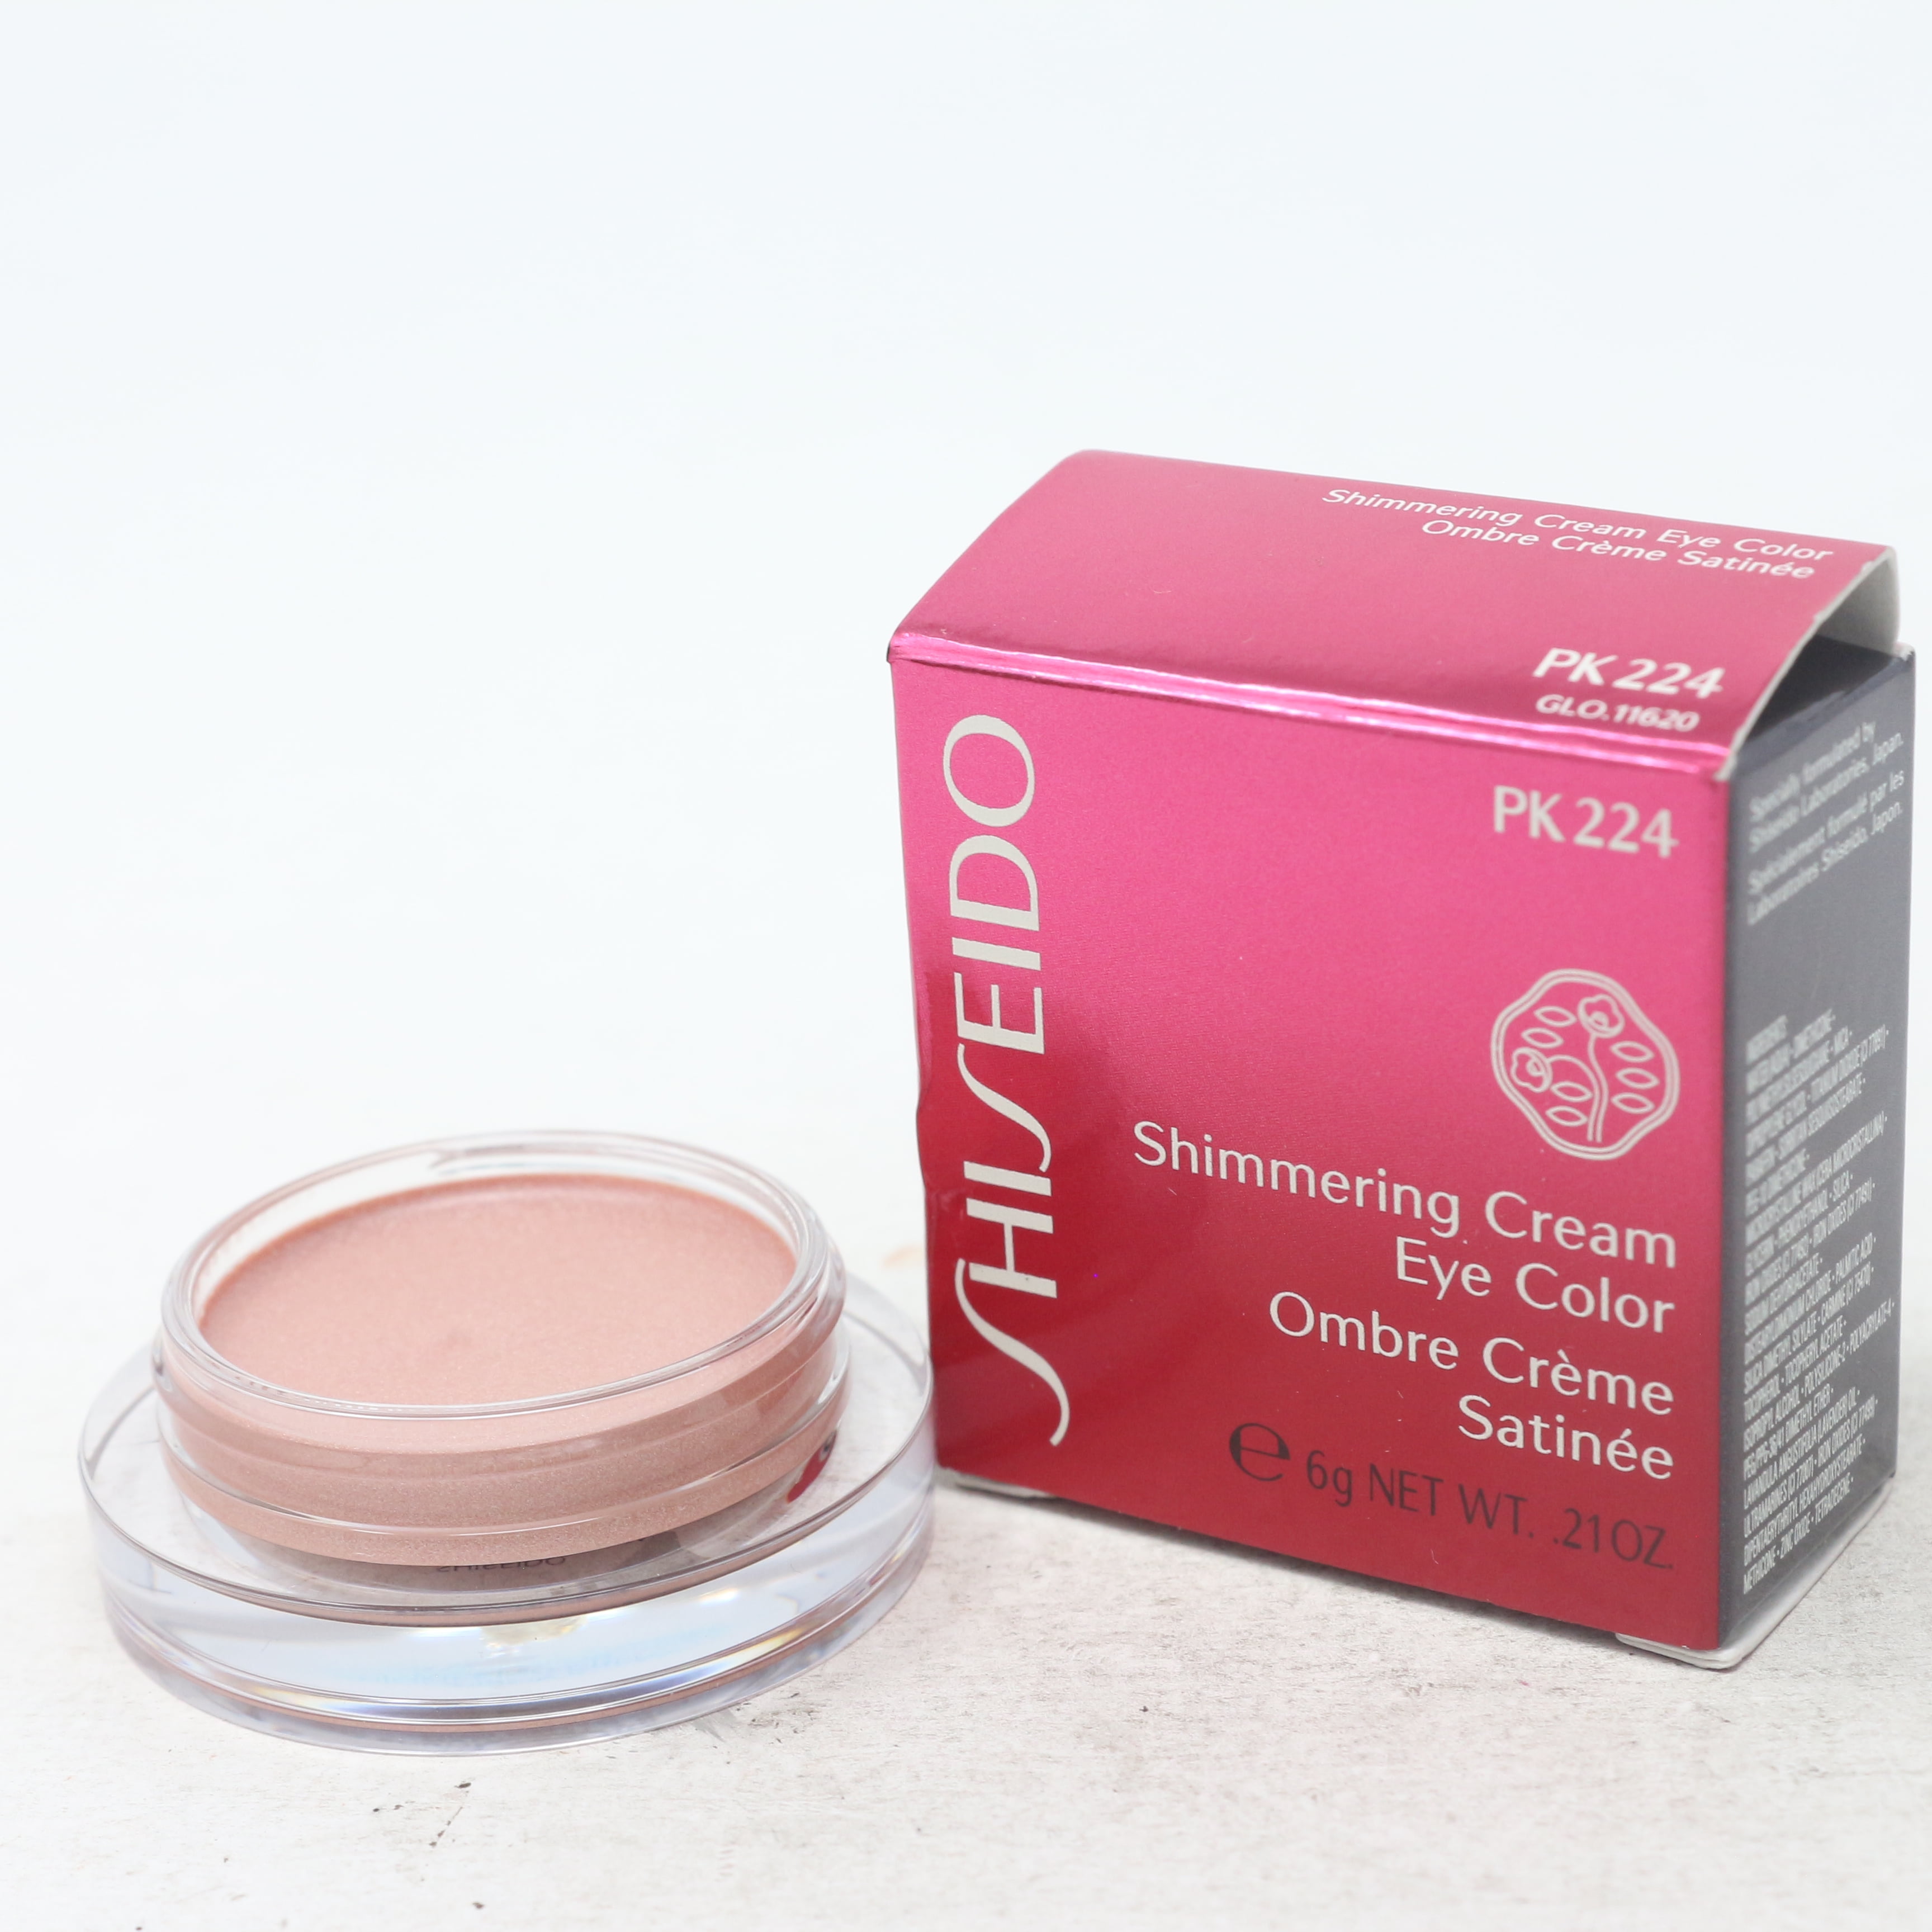 Shiseido - Shiseido Shimmering Cream Eye Color 0.21oz/6g New With Box